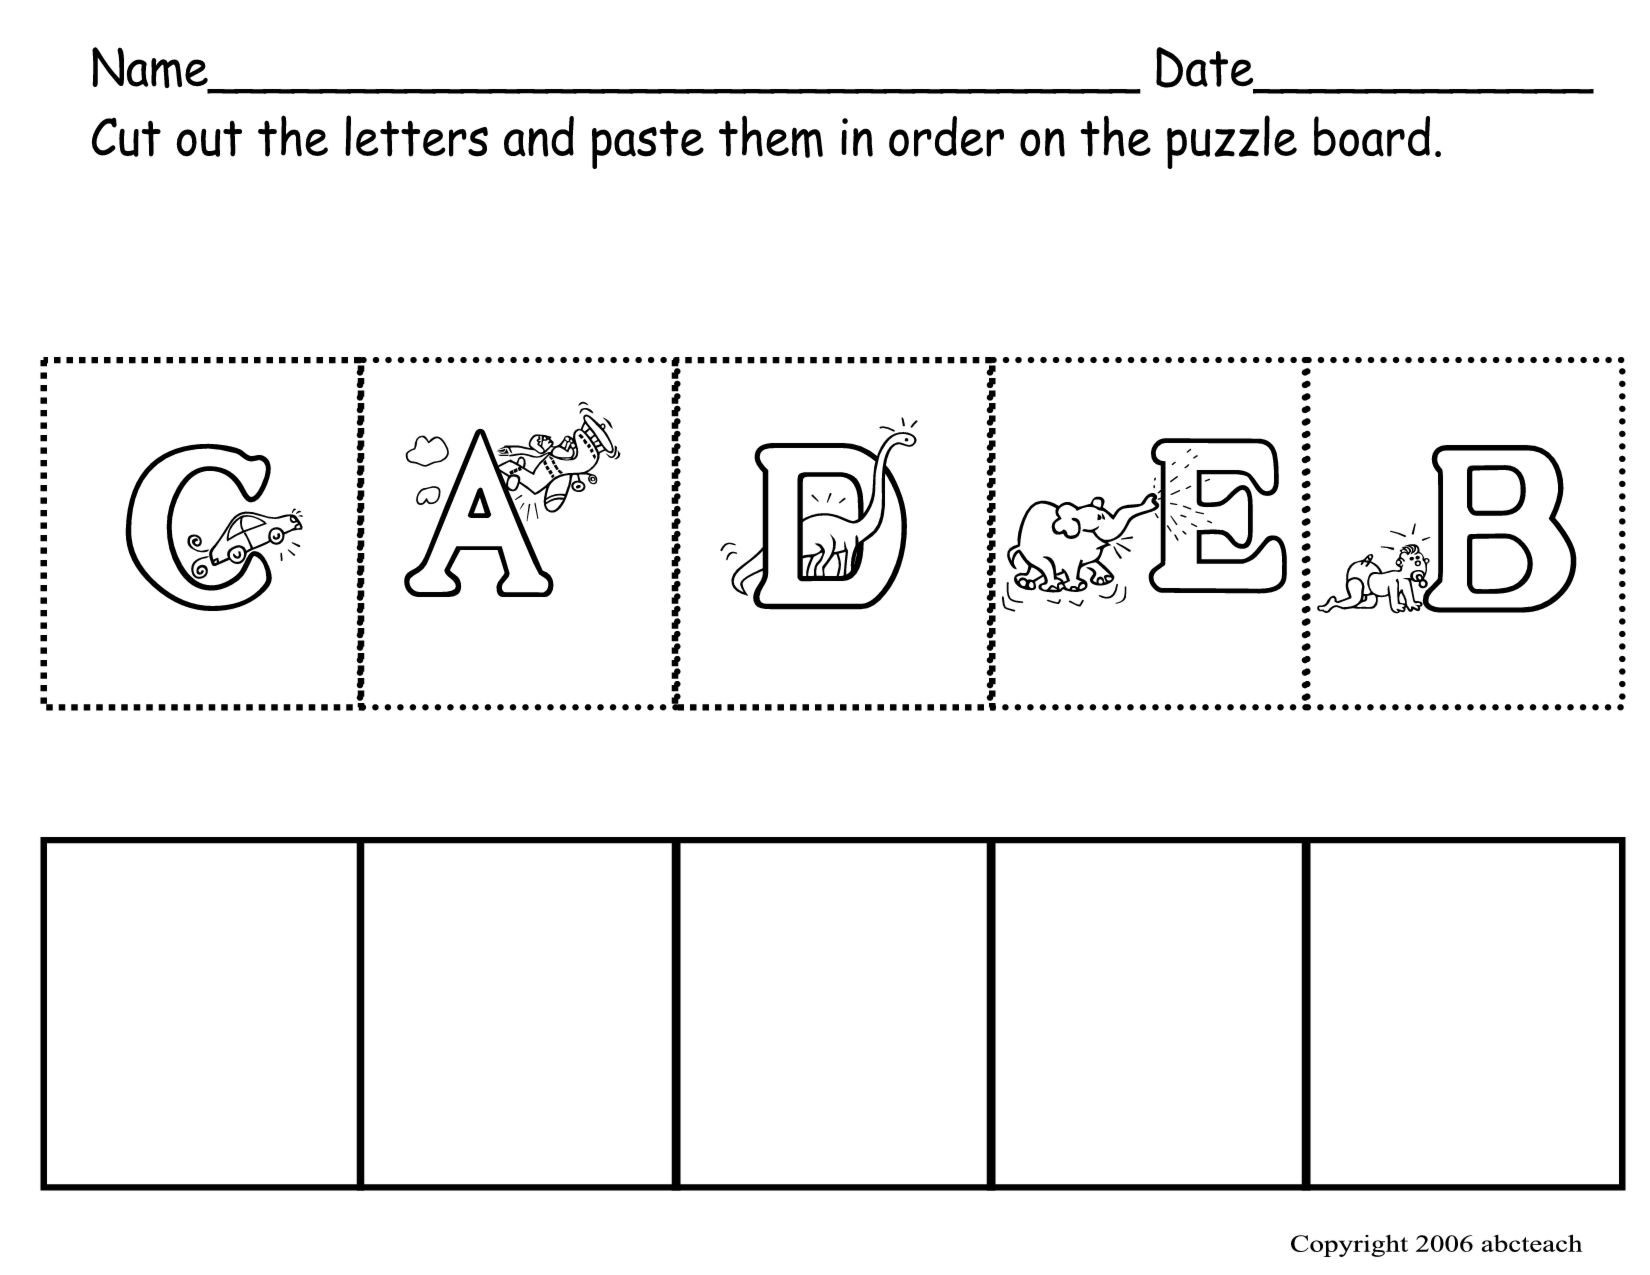  kindergarten worksheets | Preschool worksheets | Printables for kids | #45